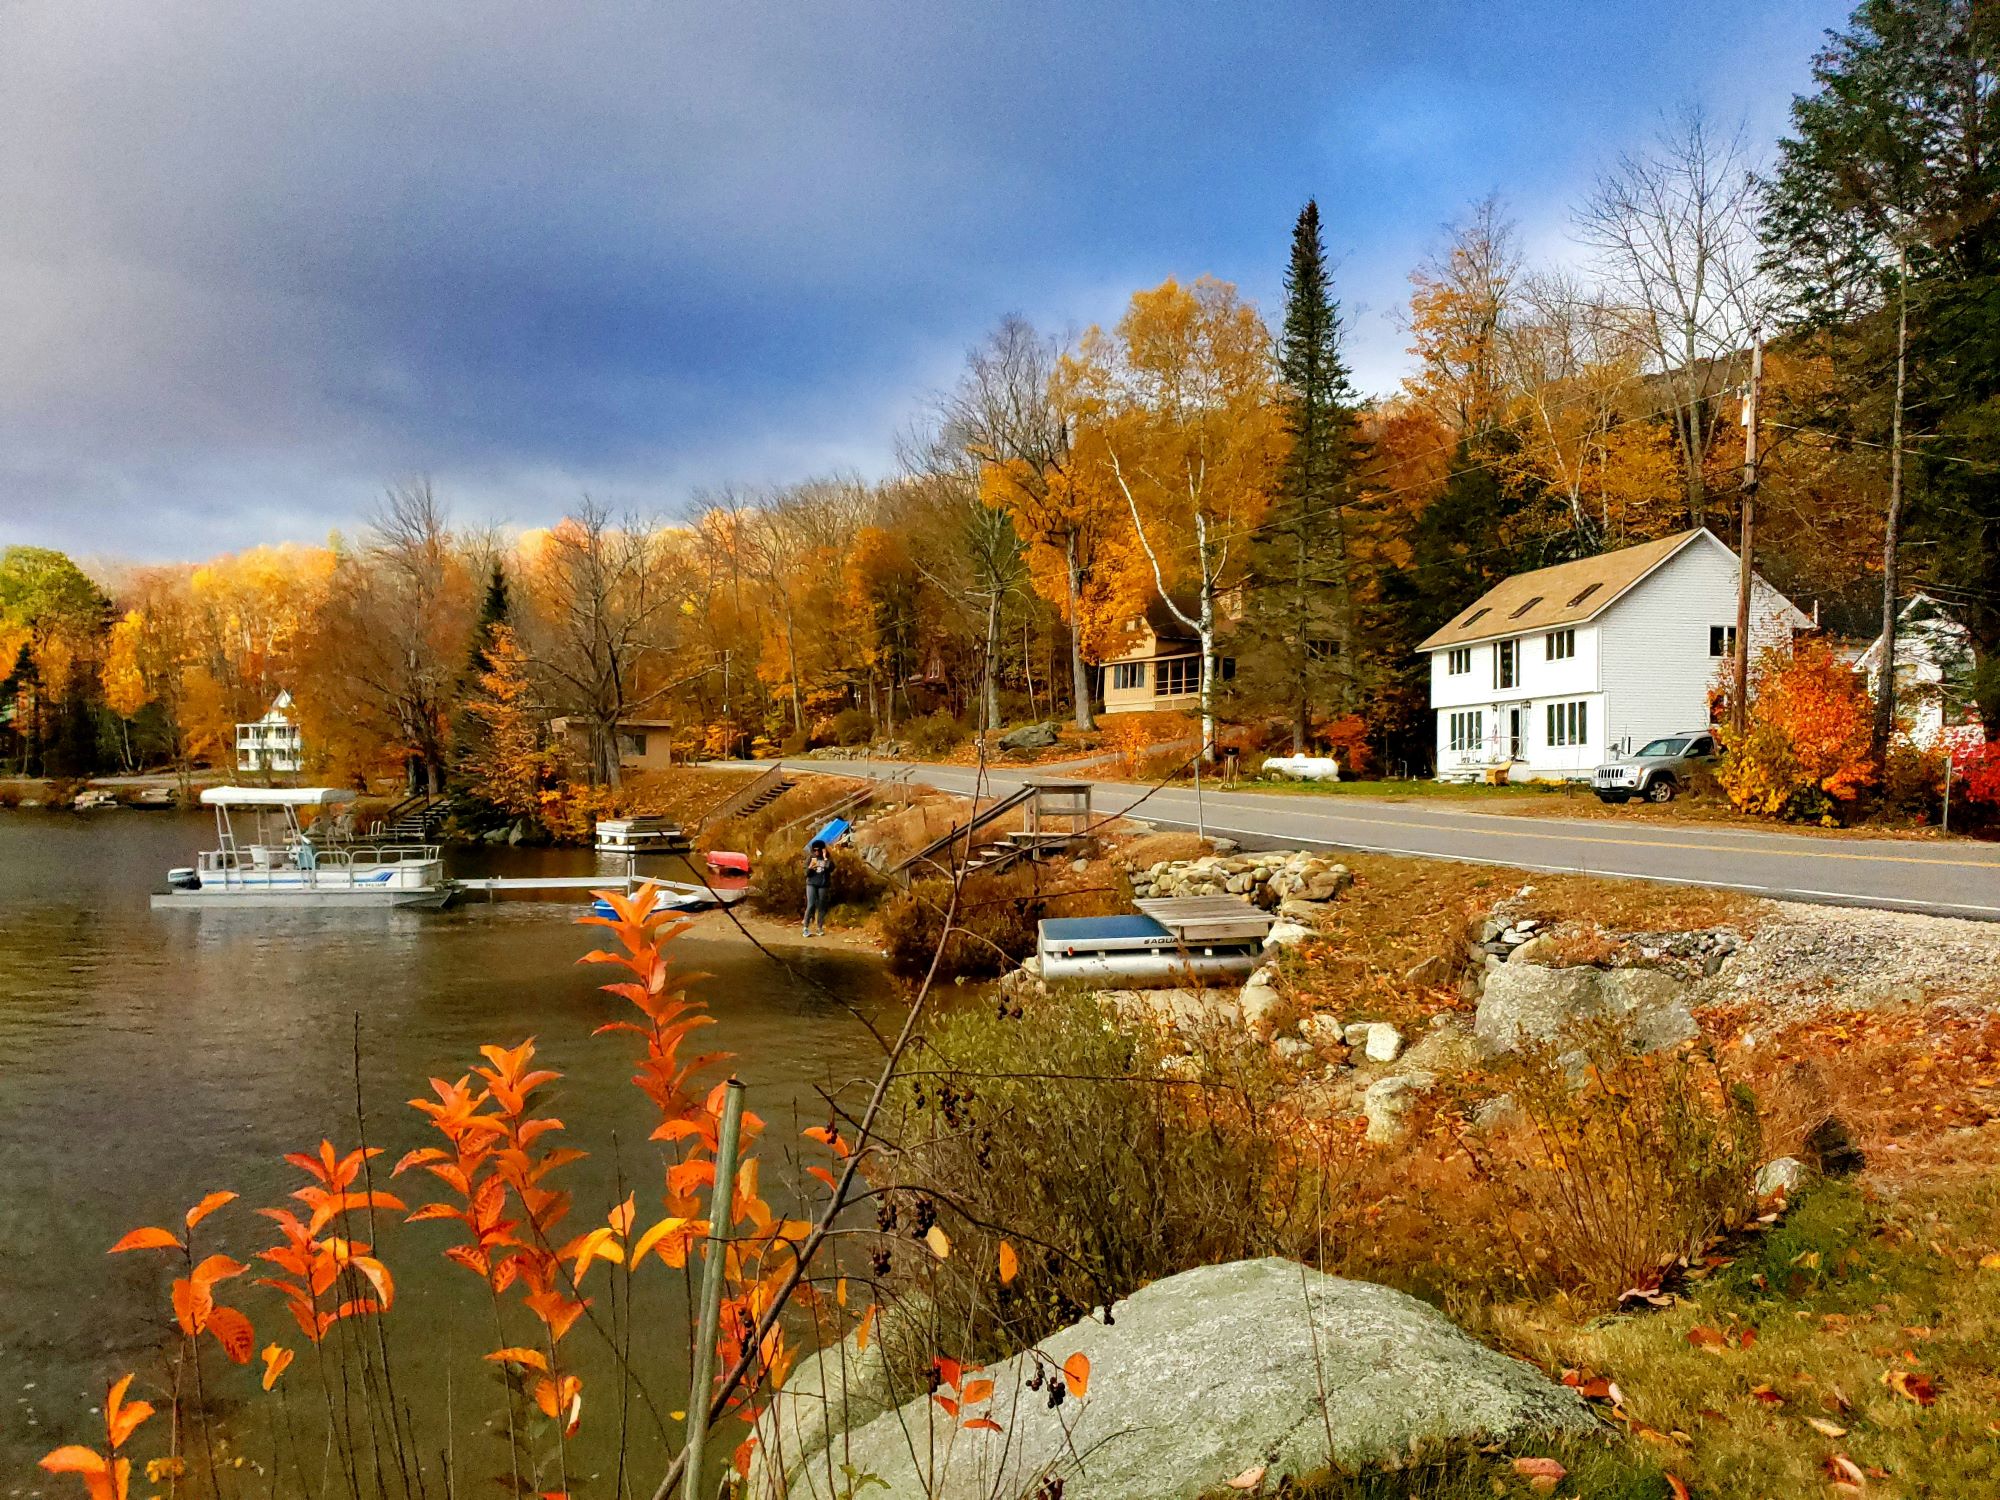 New Hampshire, USA; Image Credit, Unsplash